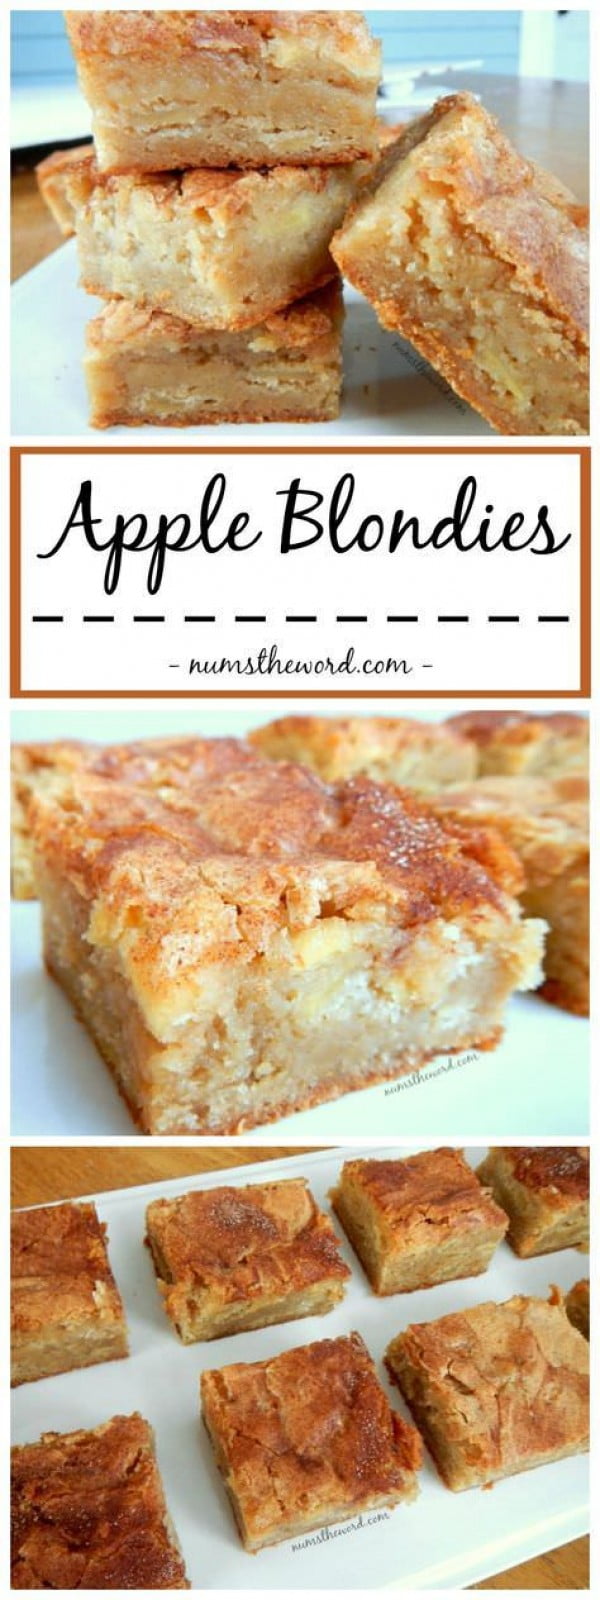 Apple Blondies #apples #food #dessert #snack #recipe